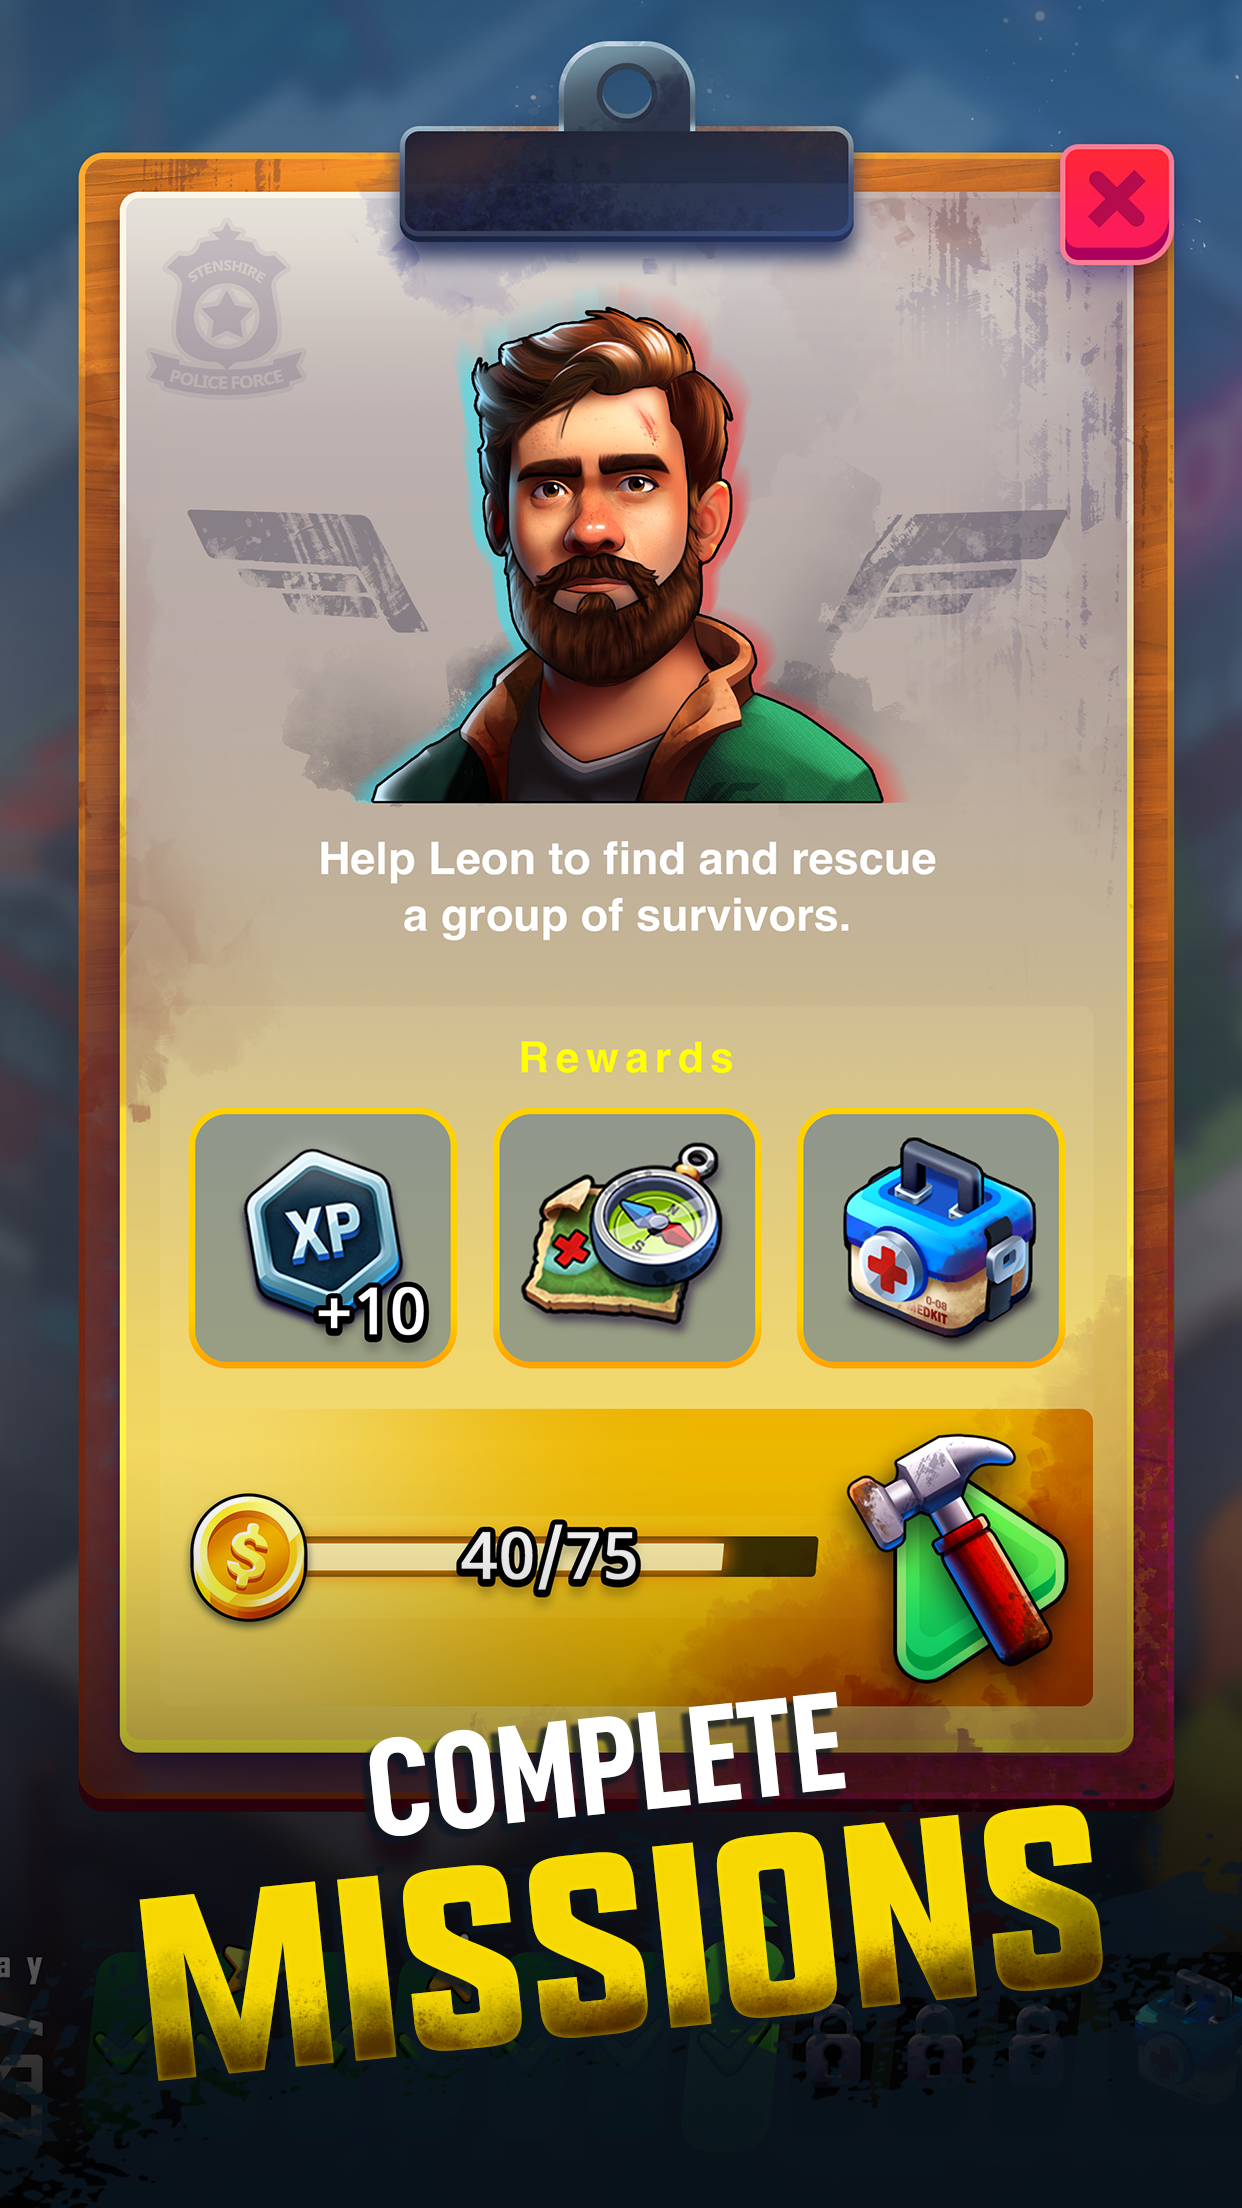 Merge 2 Survive: Zombie Game screenshot game